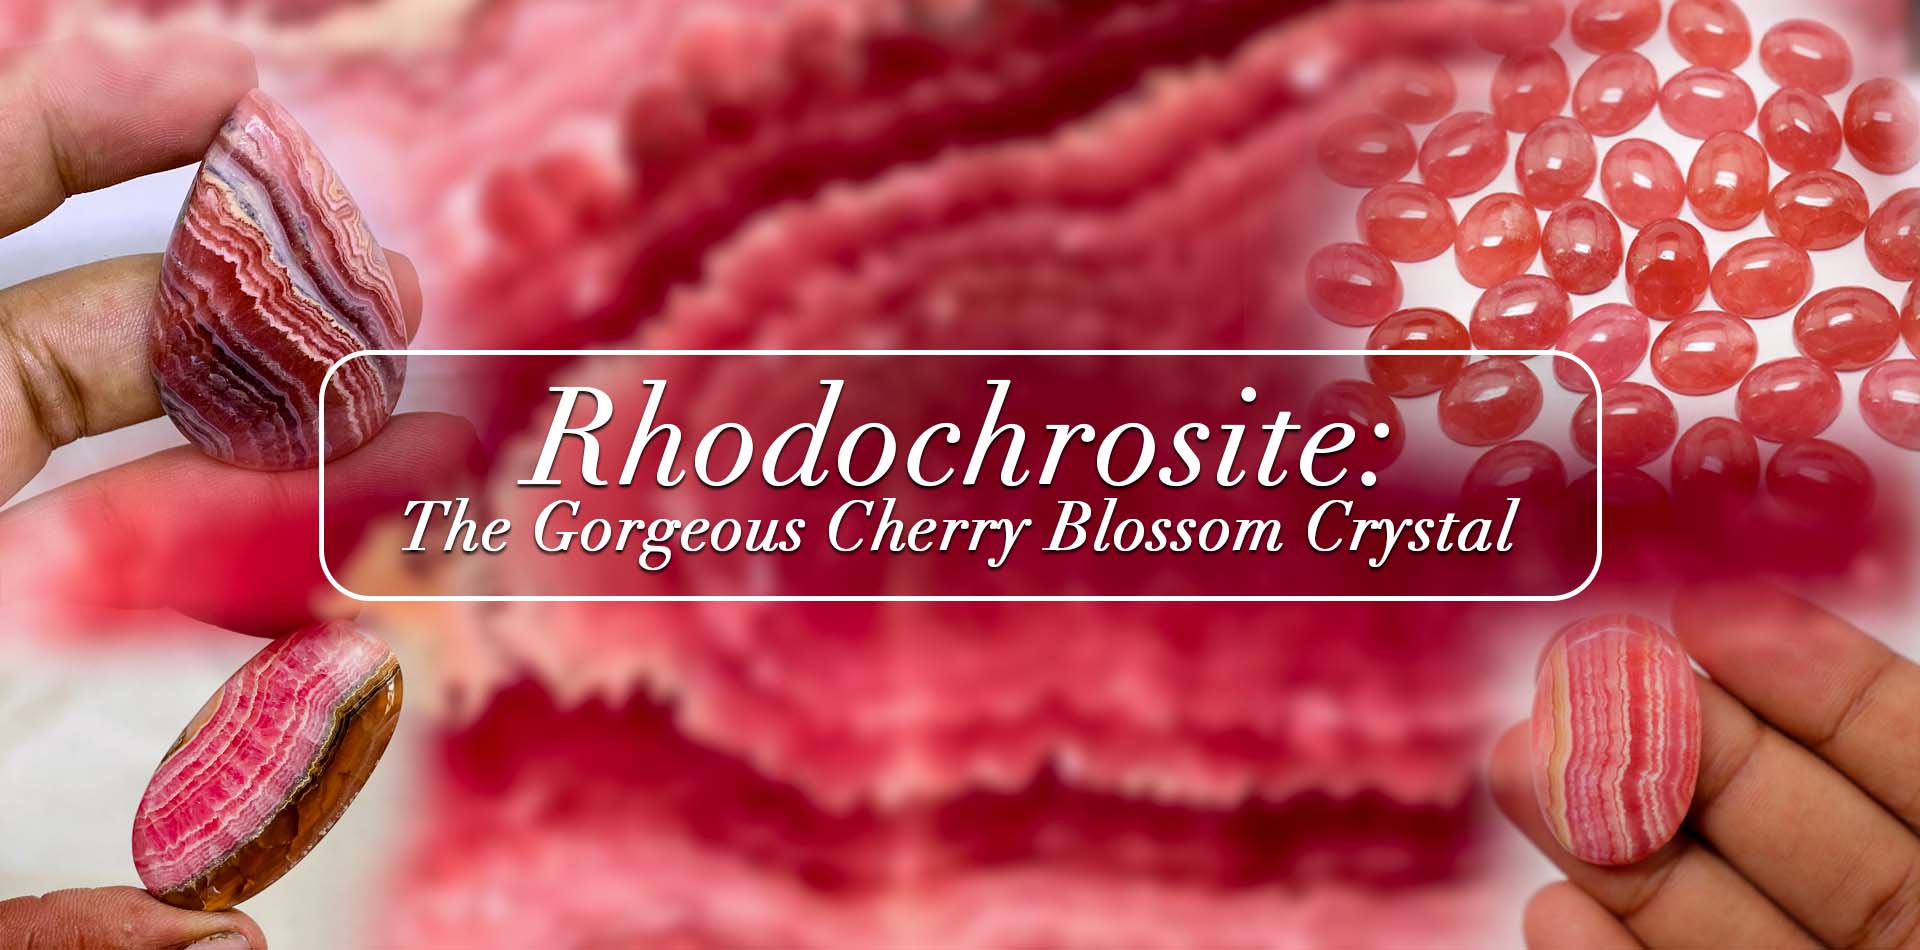 Rhodochrosite: The Gorgeous Cherry Blossom Crystal 